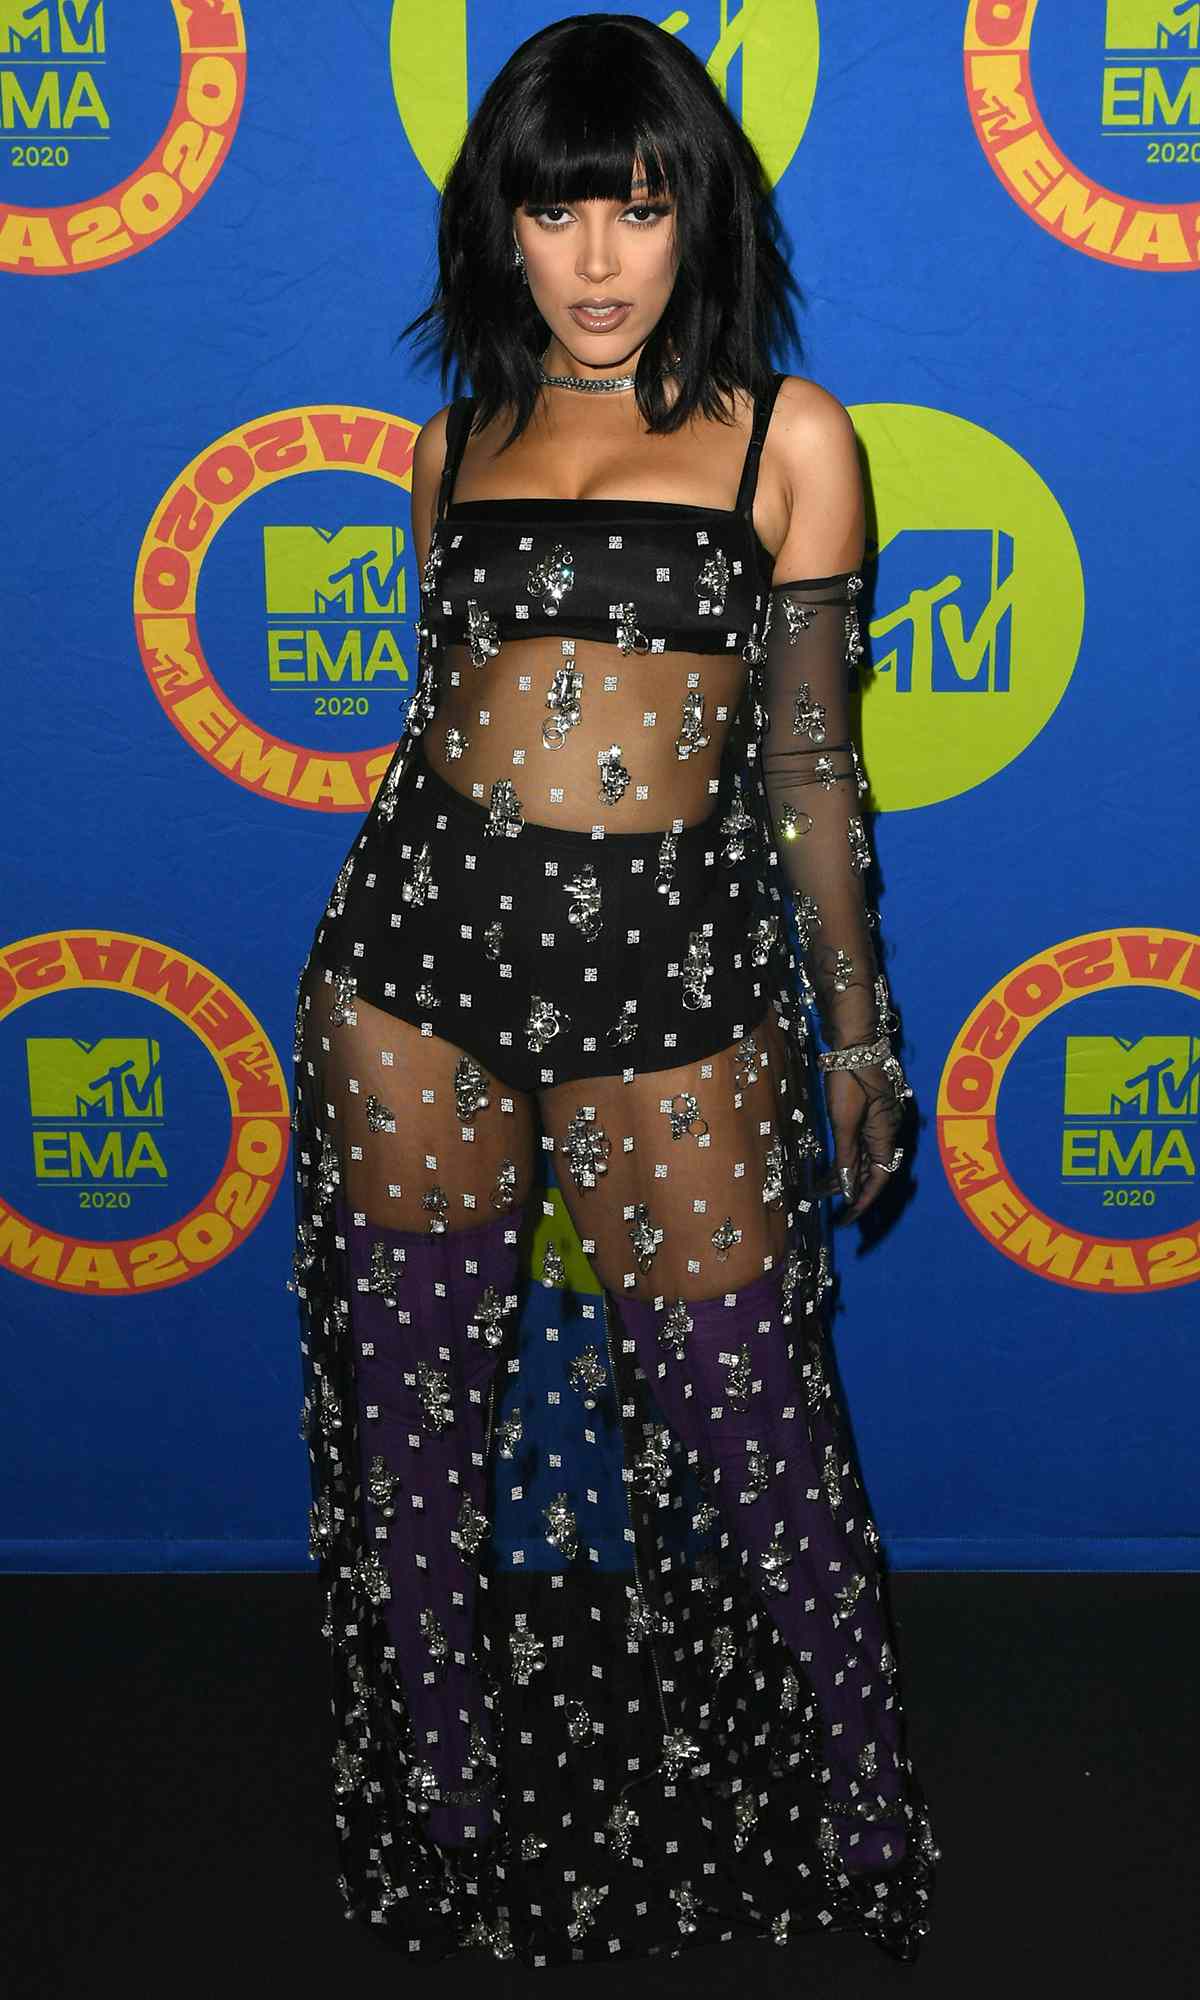 Doja Cat poses ahead of the MTV EMA's 2020 on November 01, 2020 in Los Angeles, California. The MTV EMA's aired on November 08, 2020